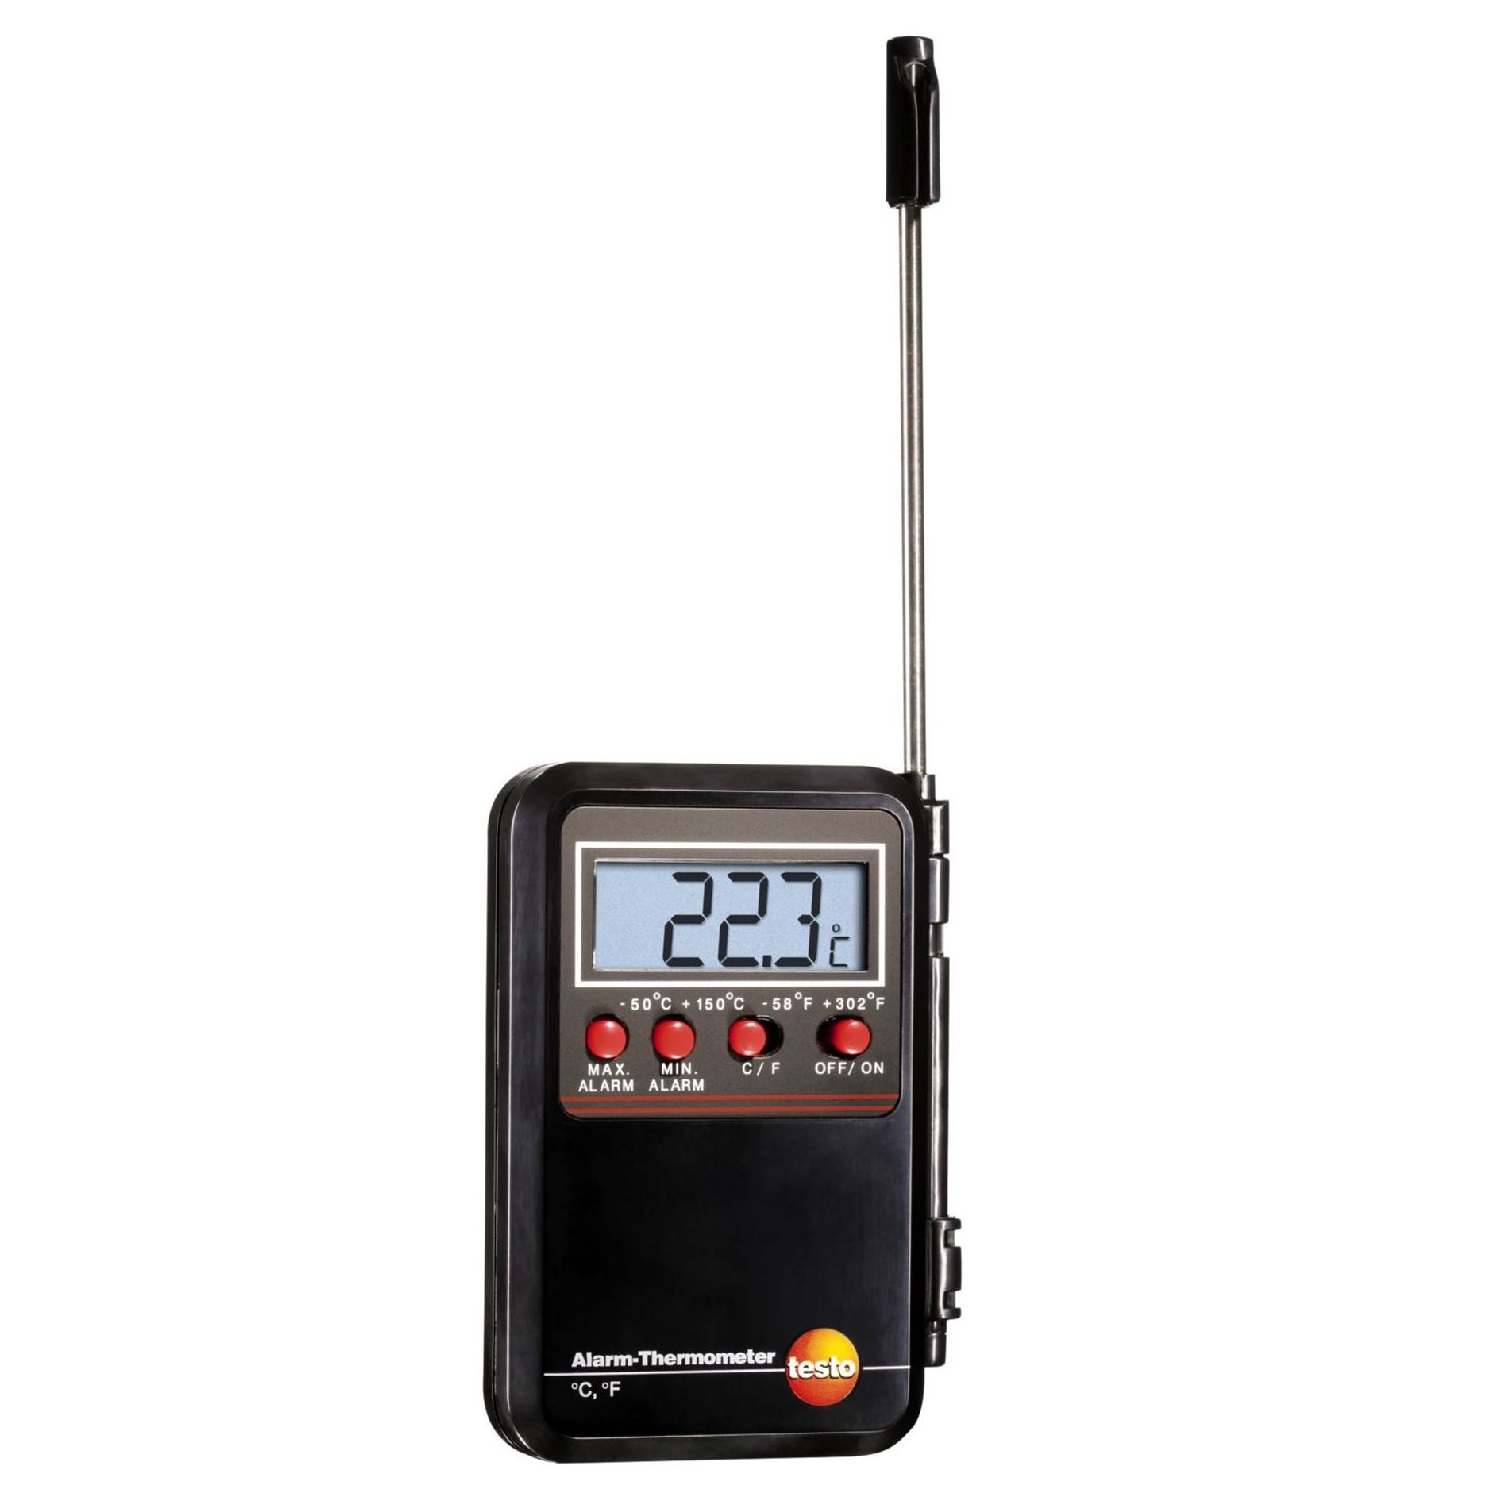 https://www.measurecon.co.in/wp-content/uploads/2020/04/Mini-Alarm-Thermometer.jpg